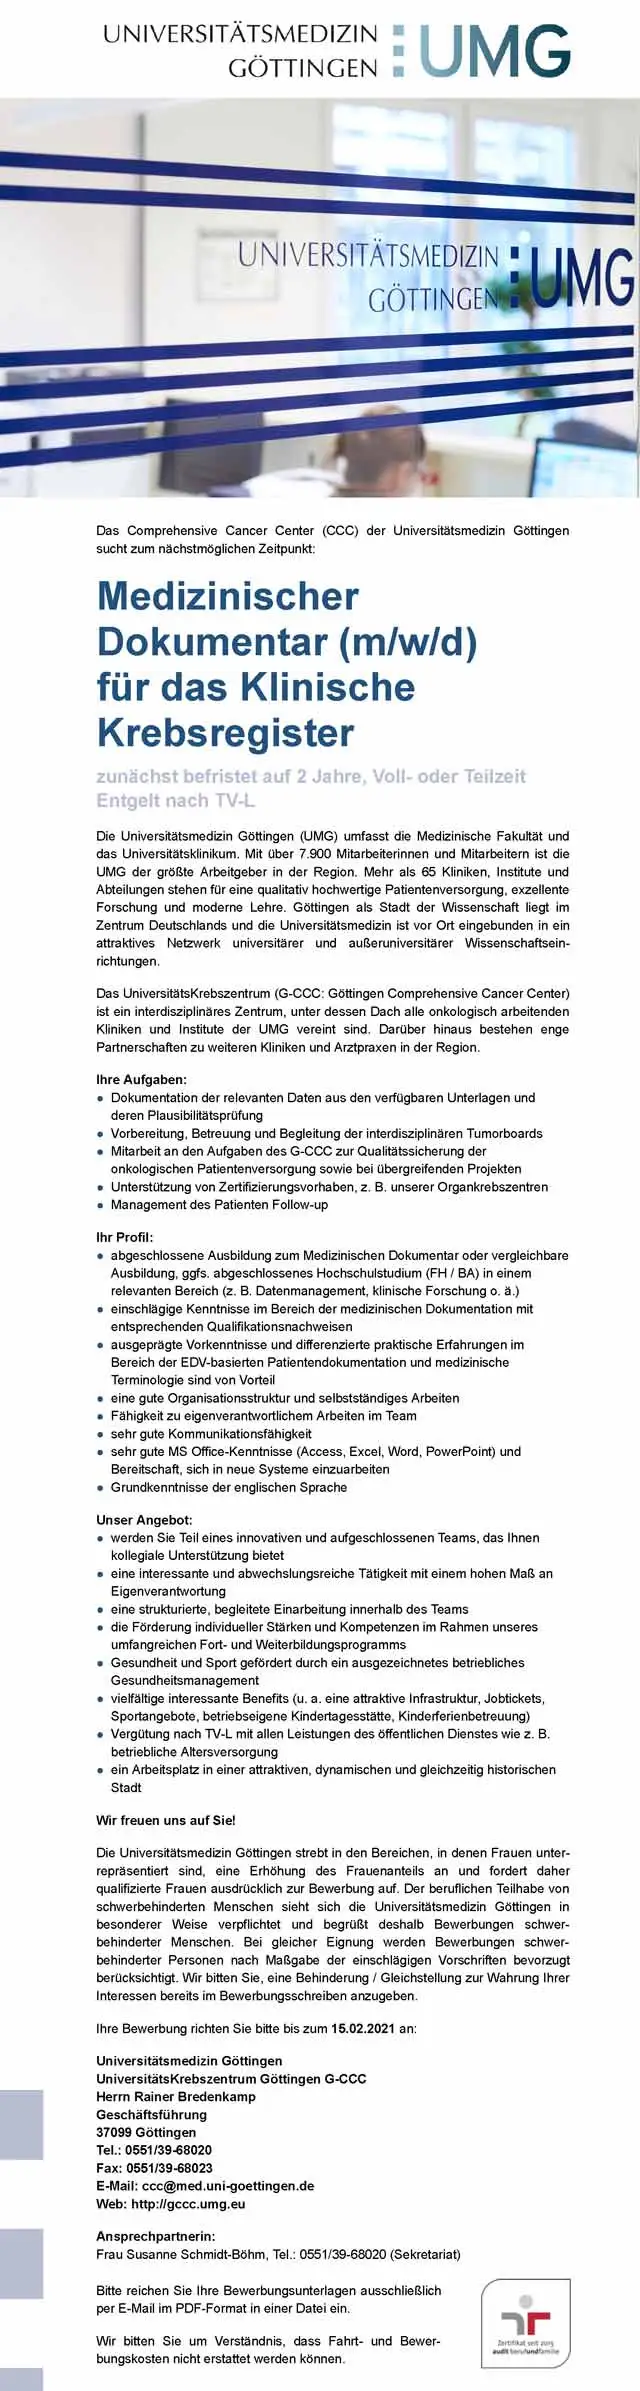 Universitätsmedizin Göttingen: Medizinischer Dokumentar (m/w/d)